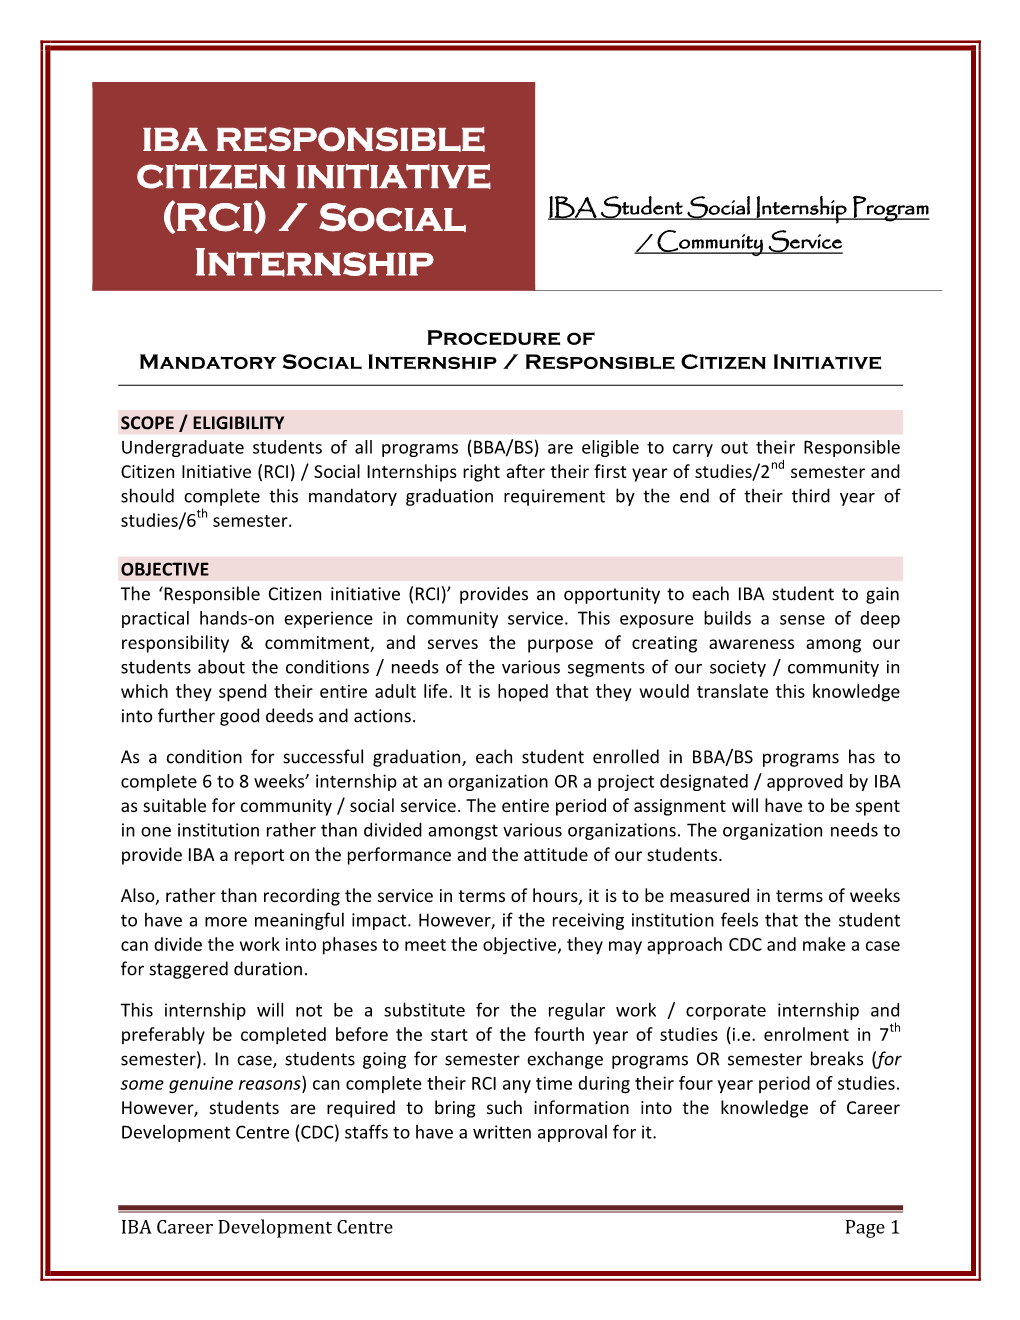 IBA RESPONSIBLE CITIZEN INITIATIVE (RCI) / Social IBA Student Social Internship Program / Community Service Internship